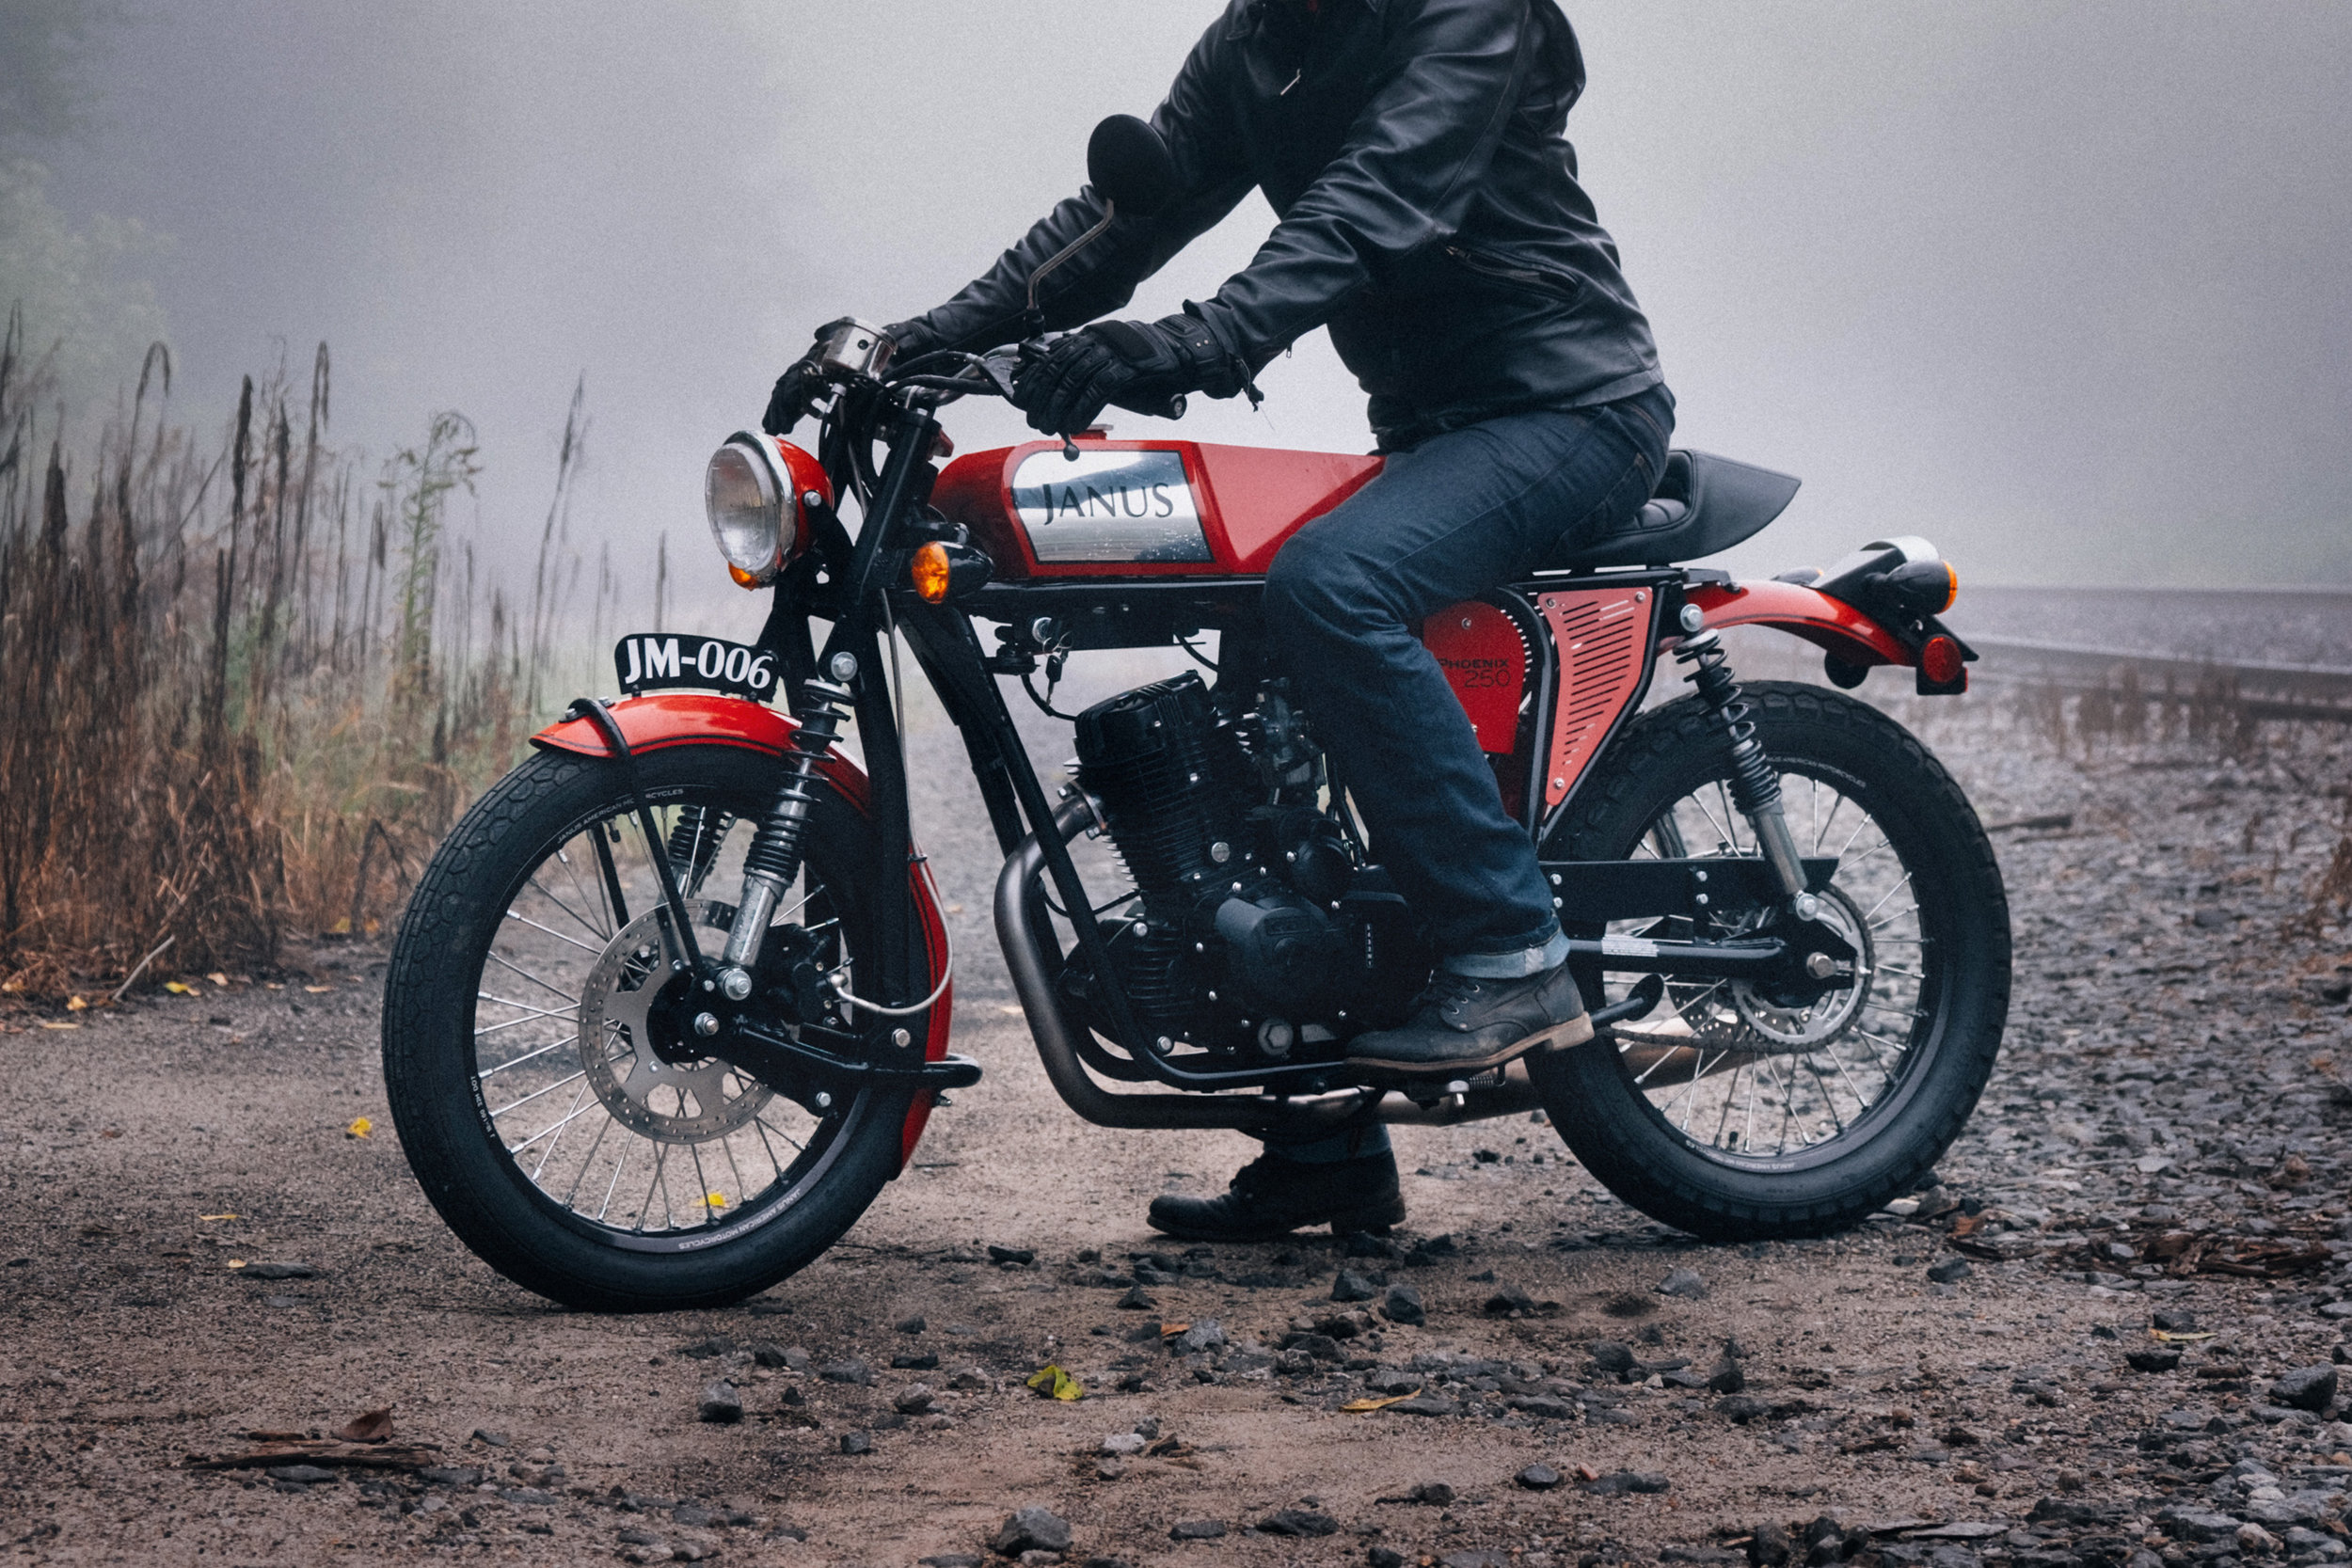 Phoenix — Janus Motorcycles